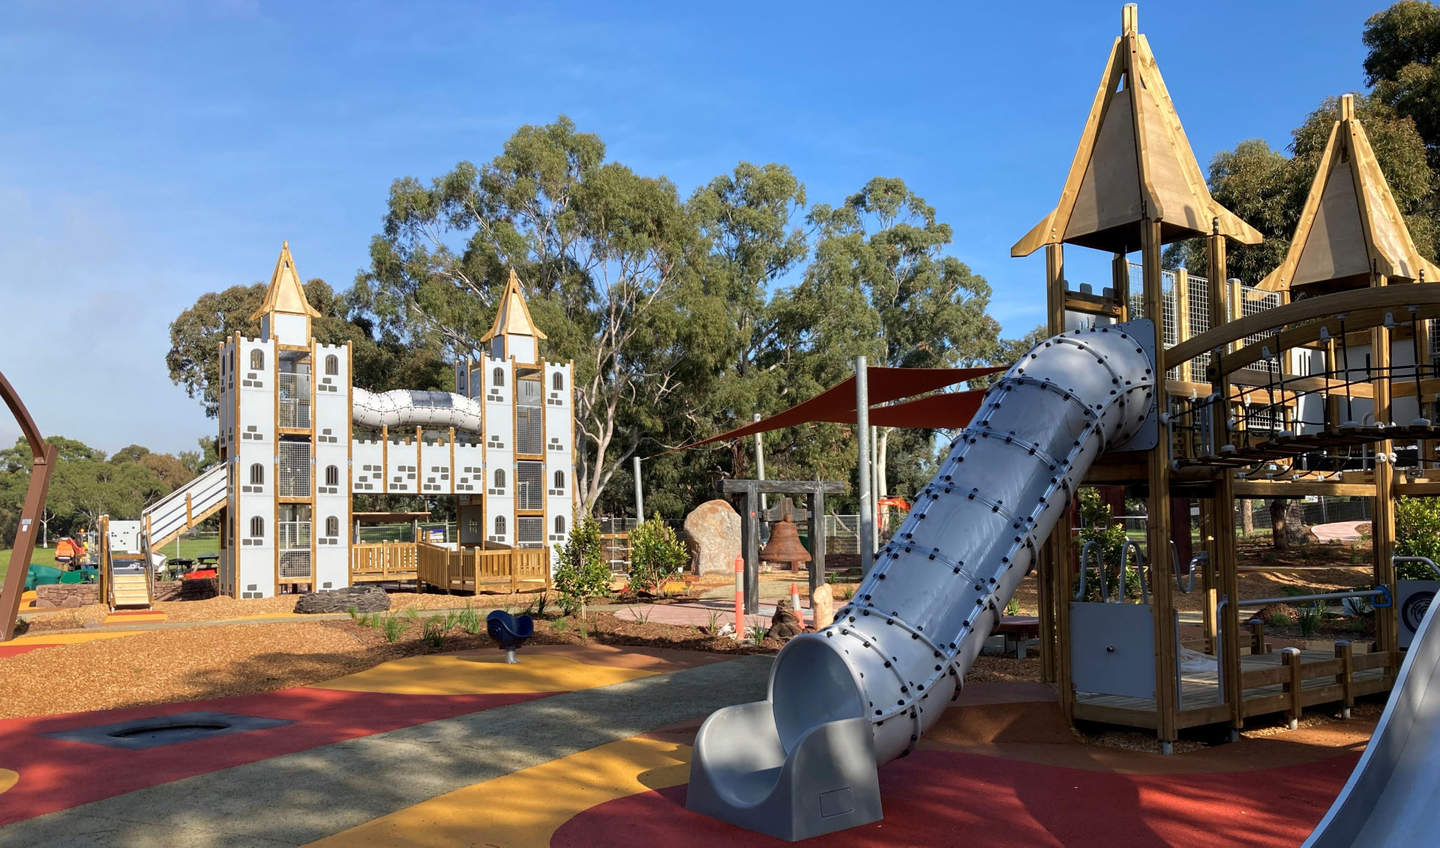 Slides at the Thomas Street playground